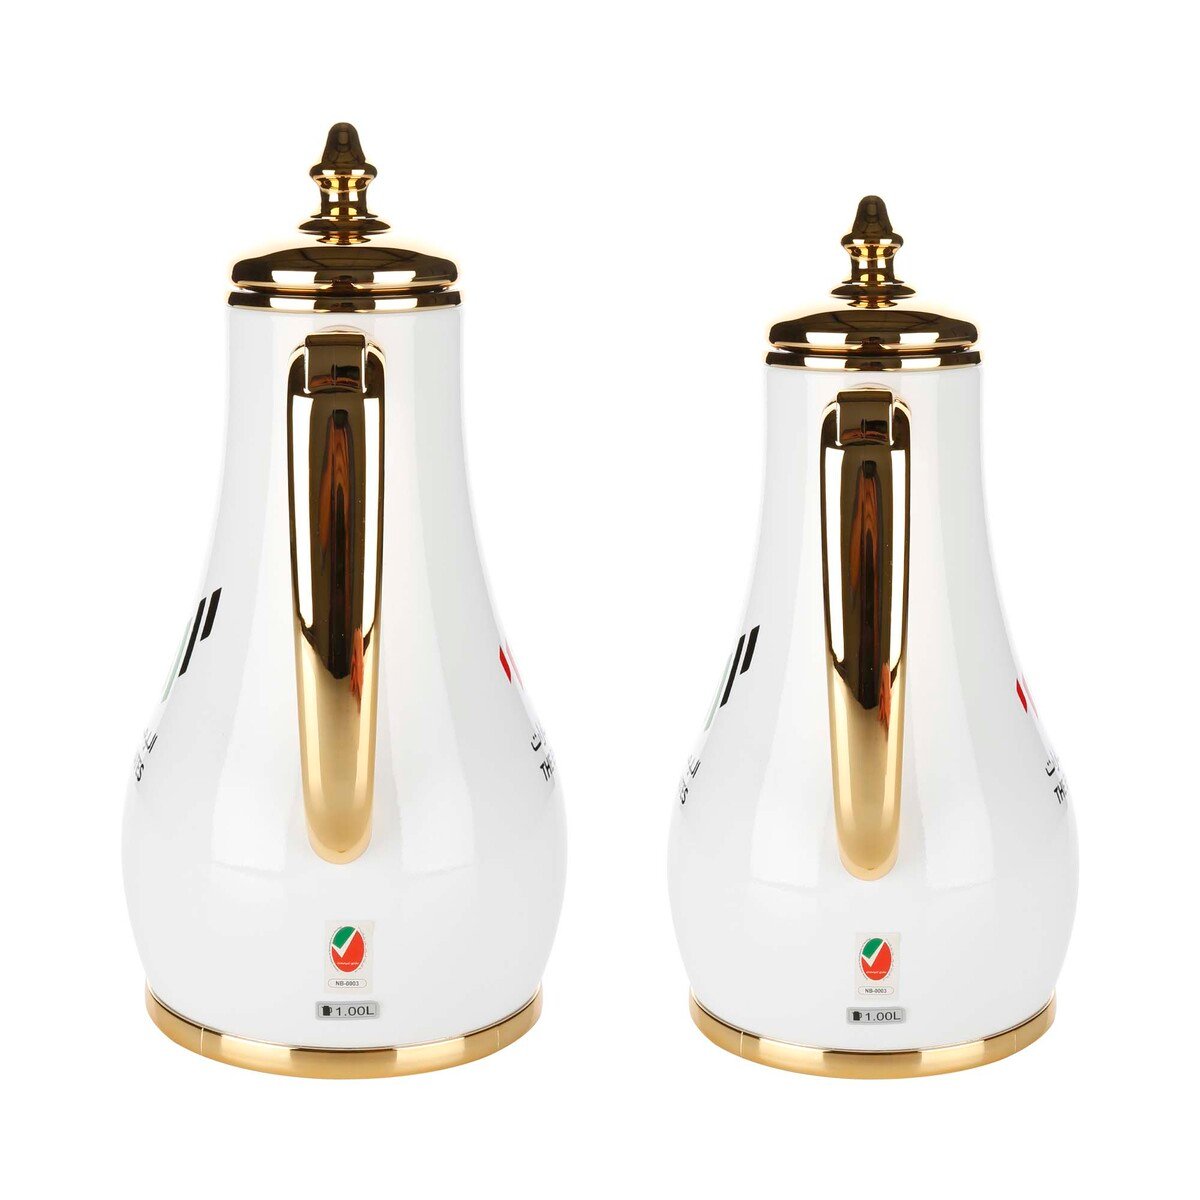 Ansa Arabic Flask With Emirates Logo 2 Pcs, 1 + 0.75 L, Gold, NDT-EK-G